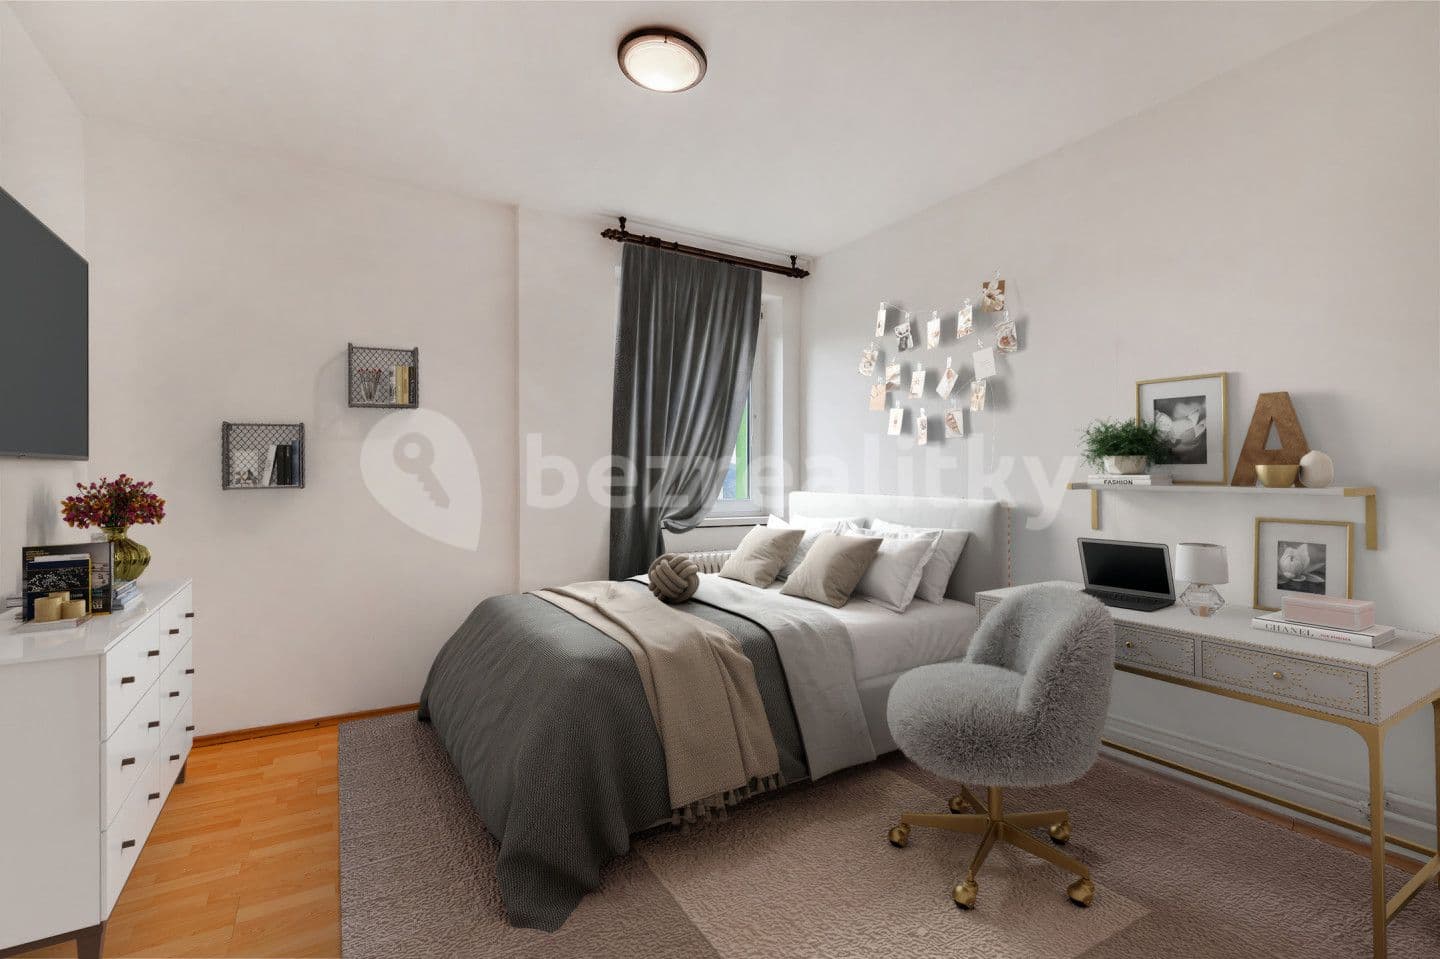 2 bedroom flat for sale, 50 m², Lovosická, Děčín, Ústecký Region